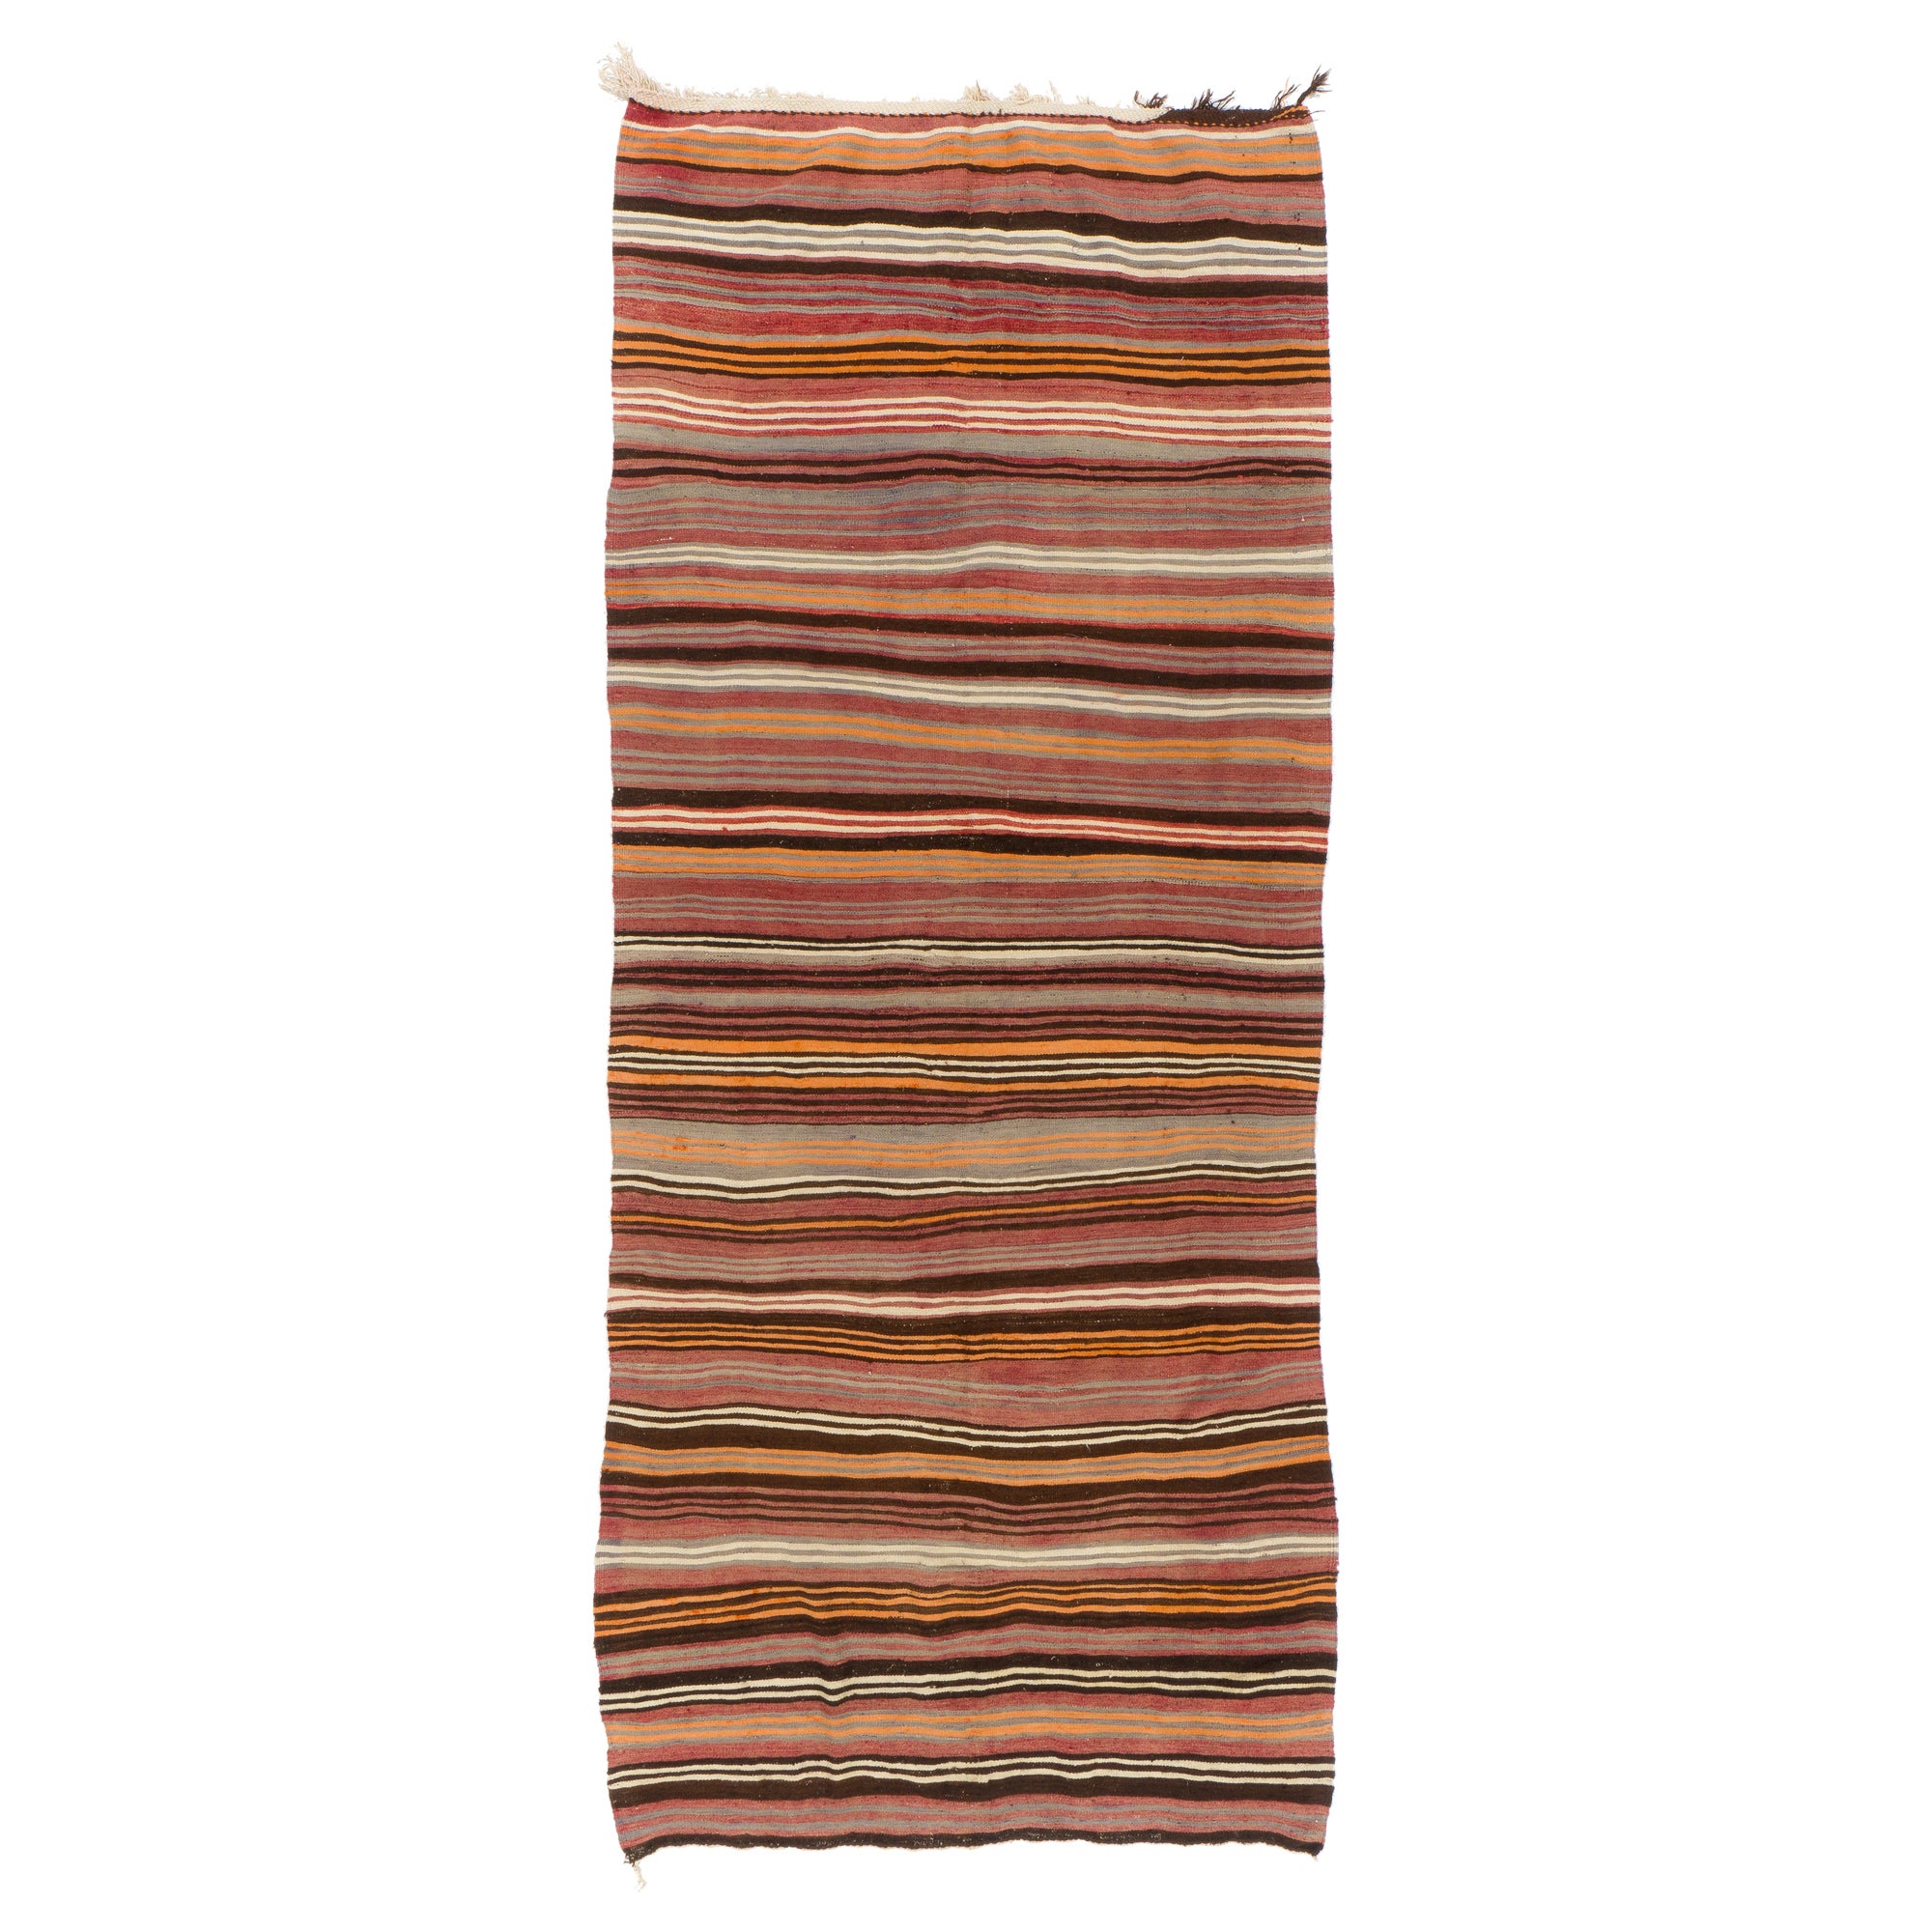 5x11.8 Ft Handmade Vintage Striped Turkish Runner Kilim. Flat-Weave Colorful Rug